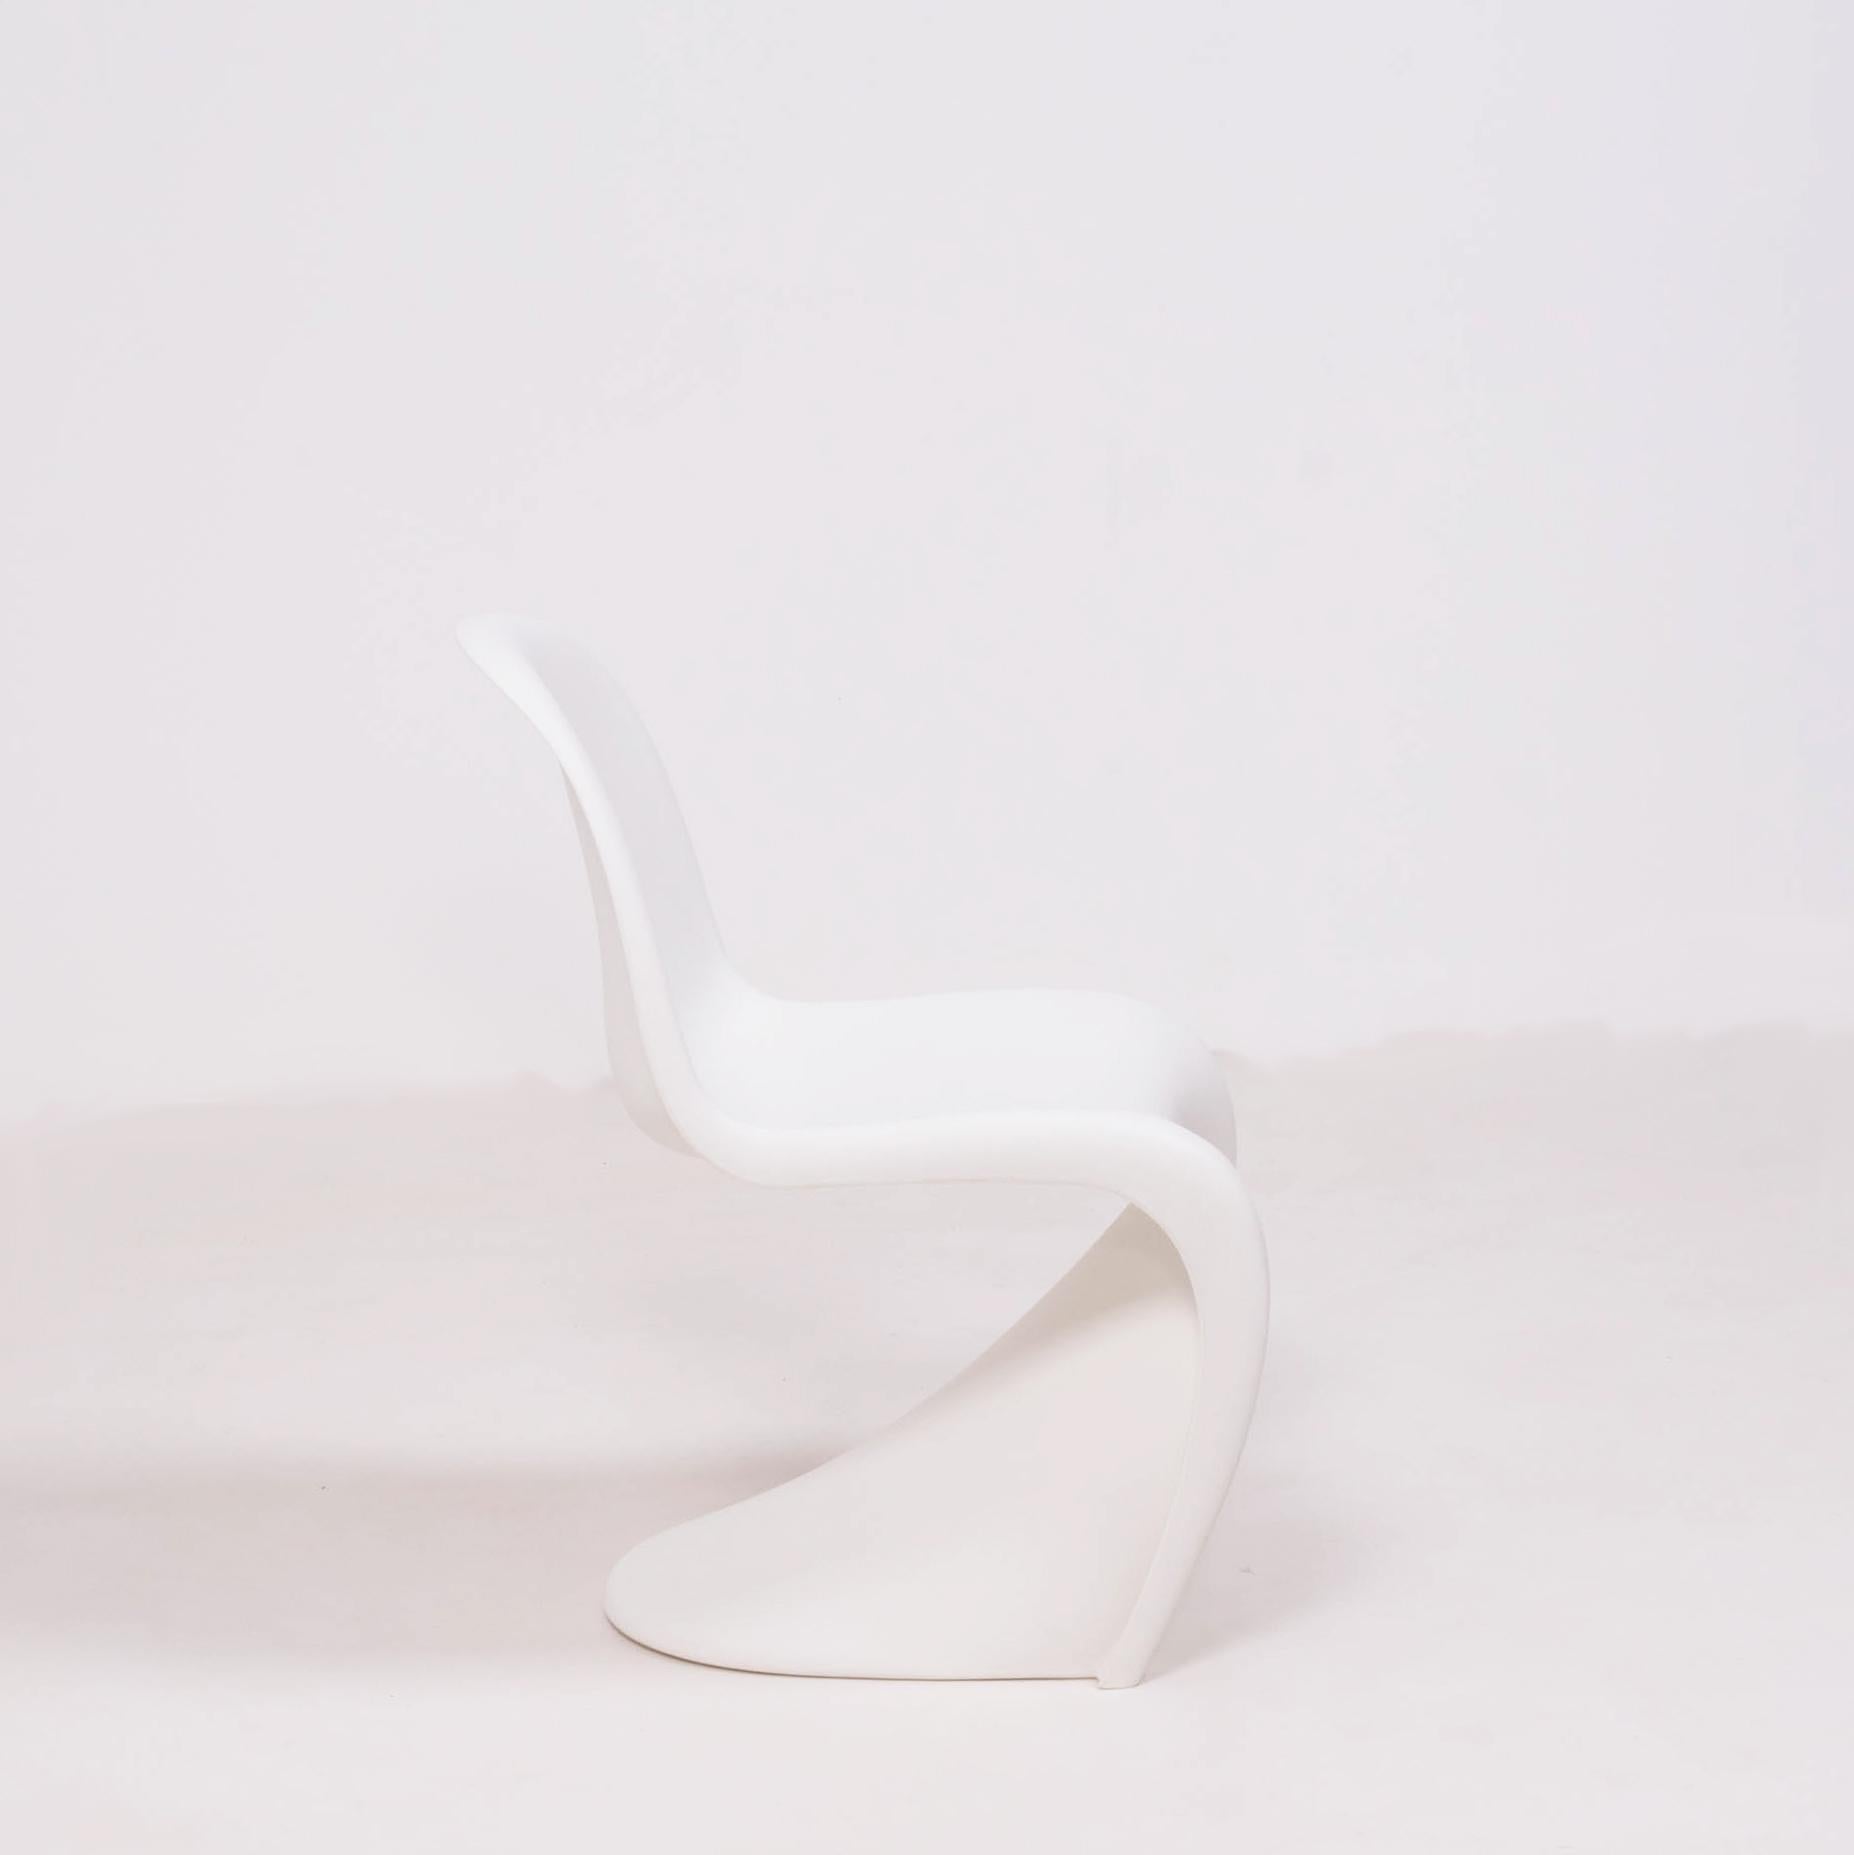 Swiss Vitra Mid-Century Modern White Panton Chairs by Verner Panton